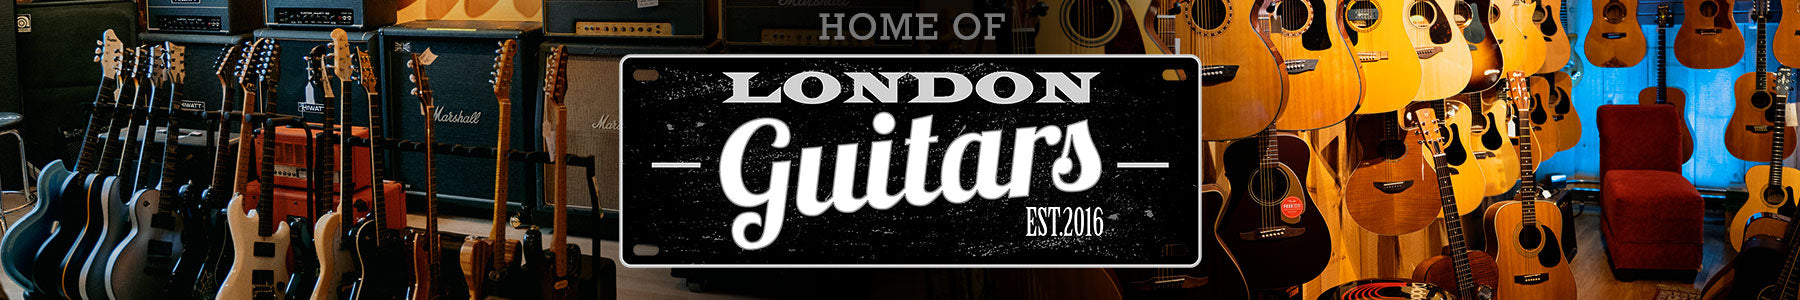 Home of London Guitars